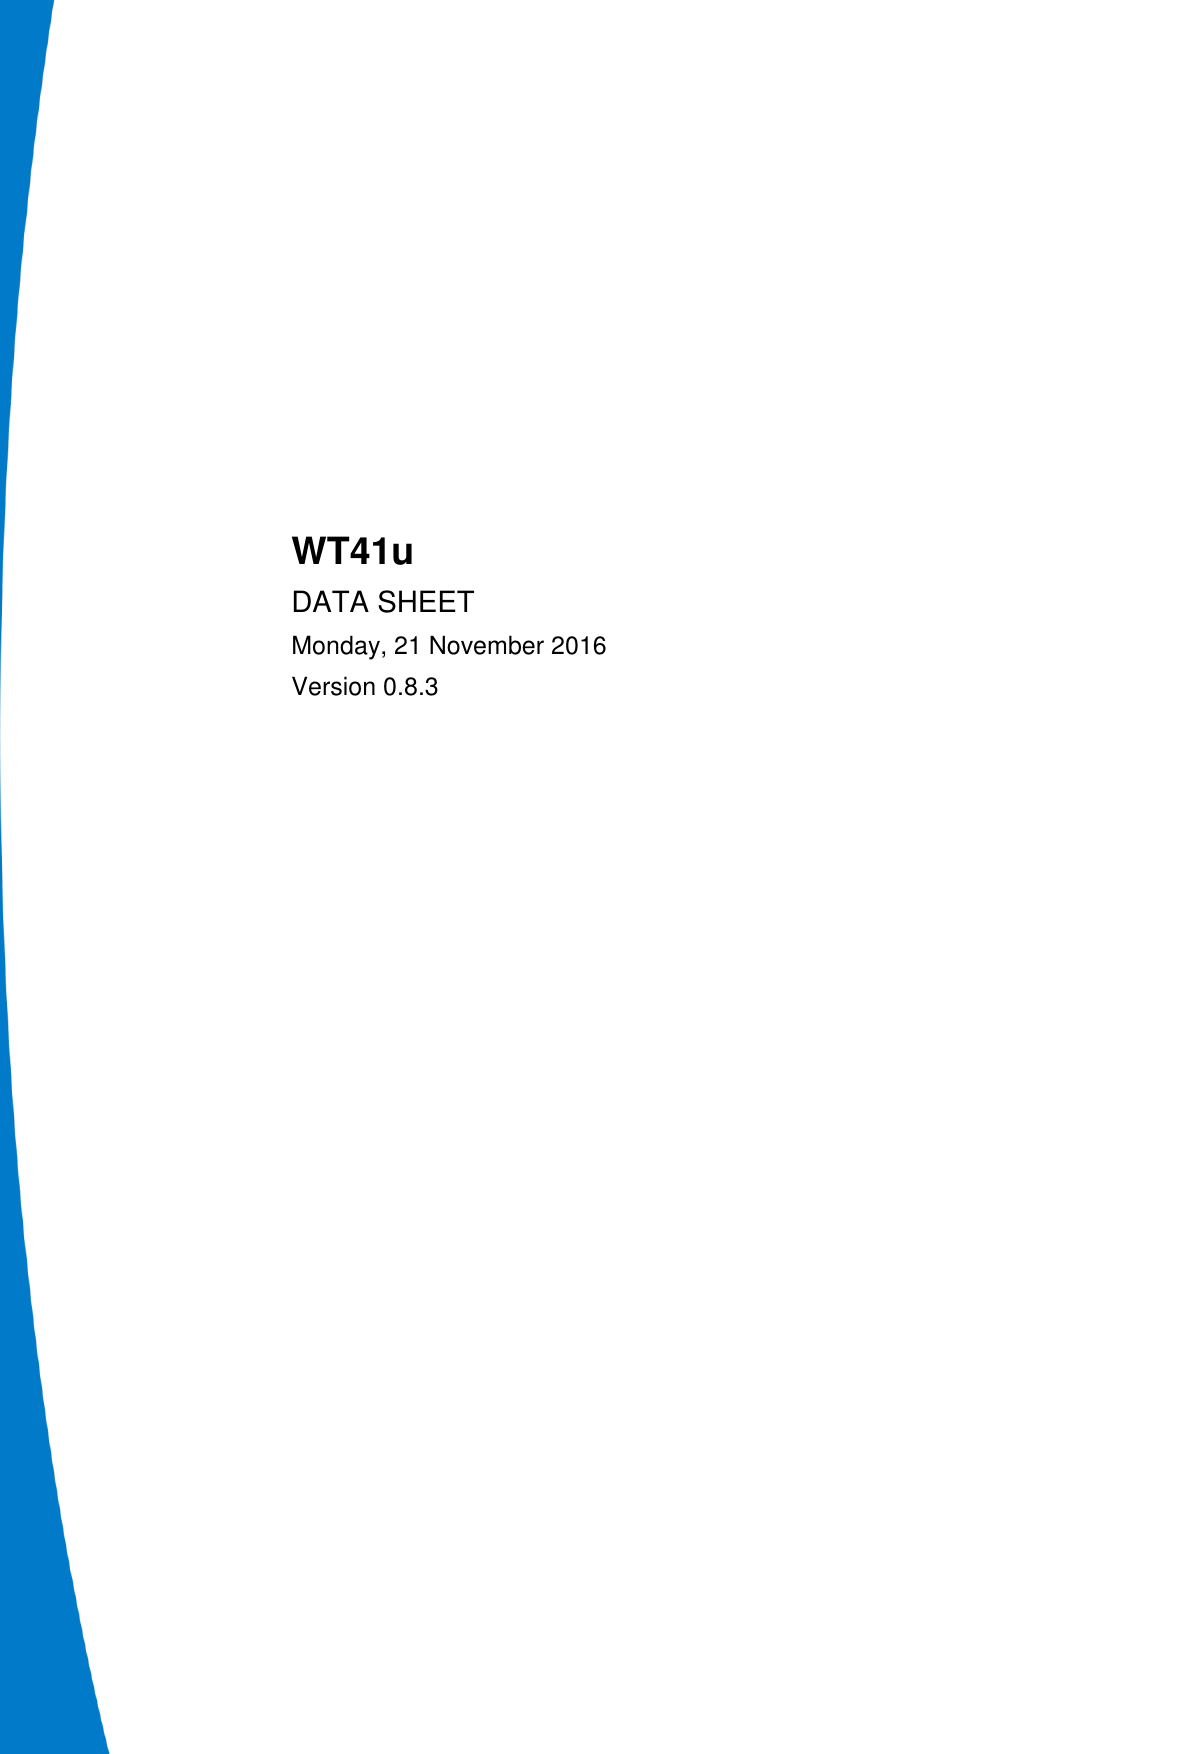                                           WT41u DATA SHEET Monday, 21 November 2016 Version 0.8.3 